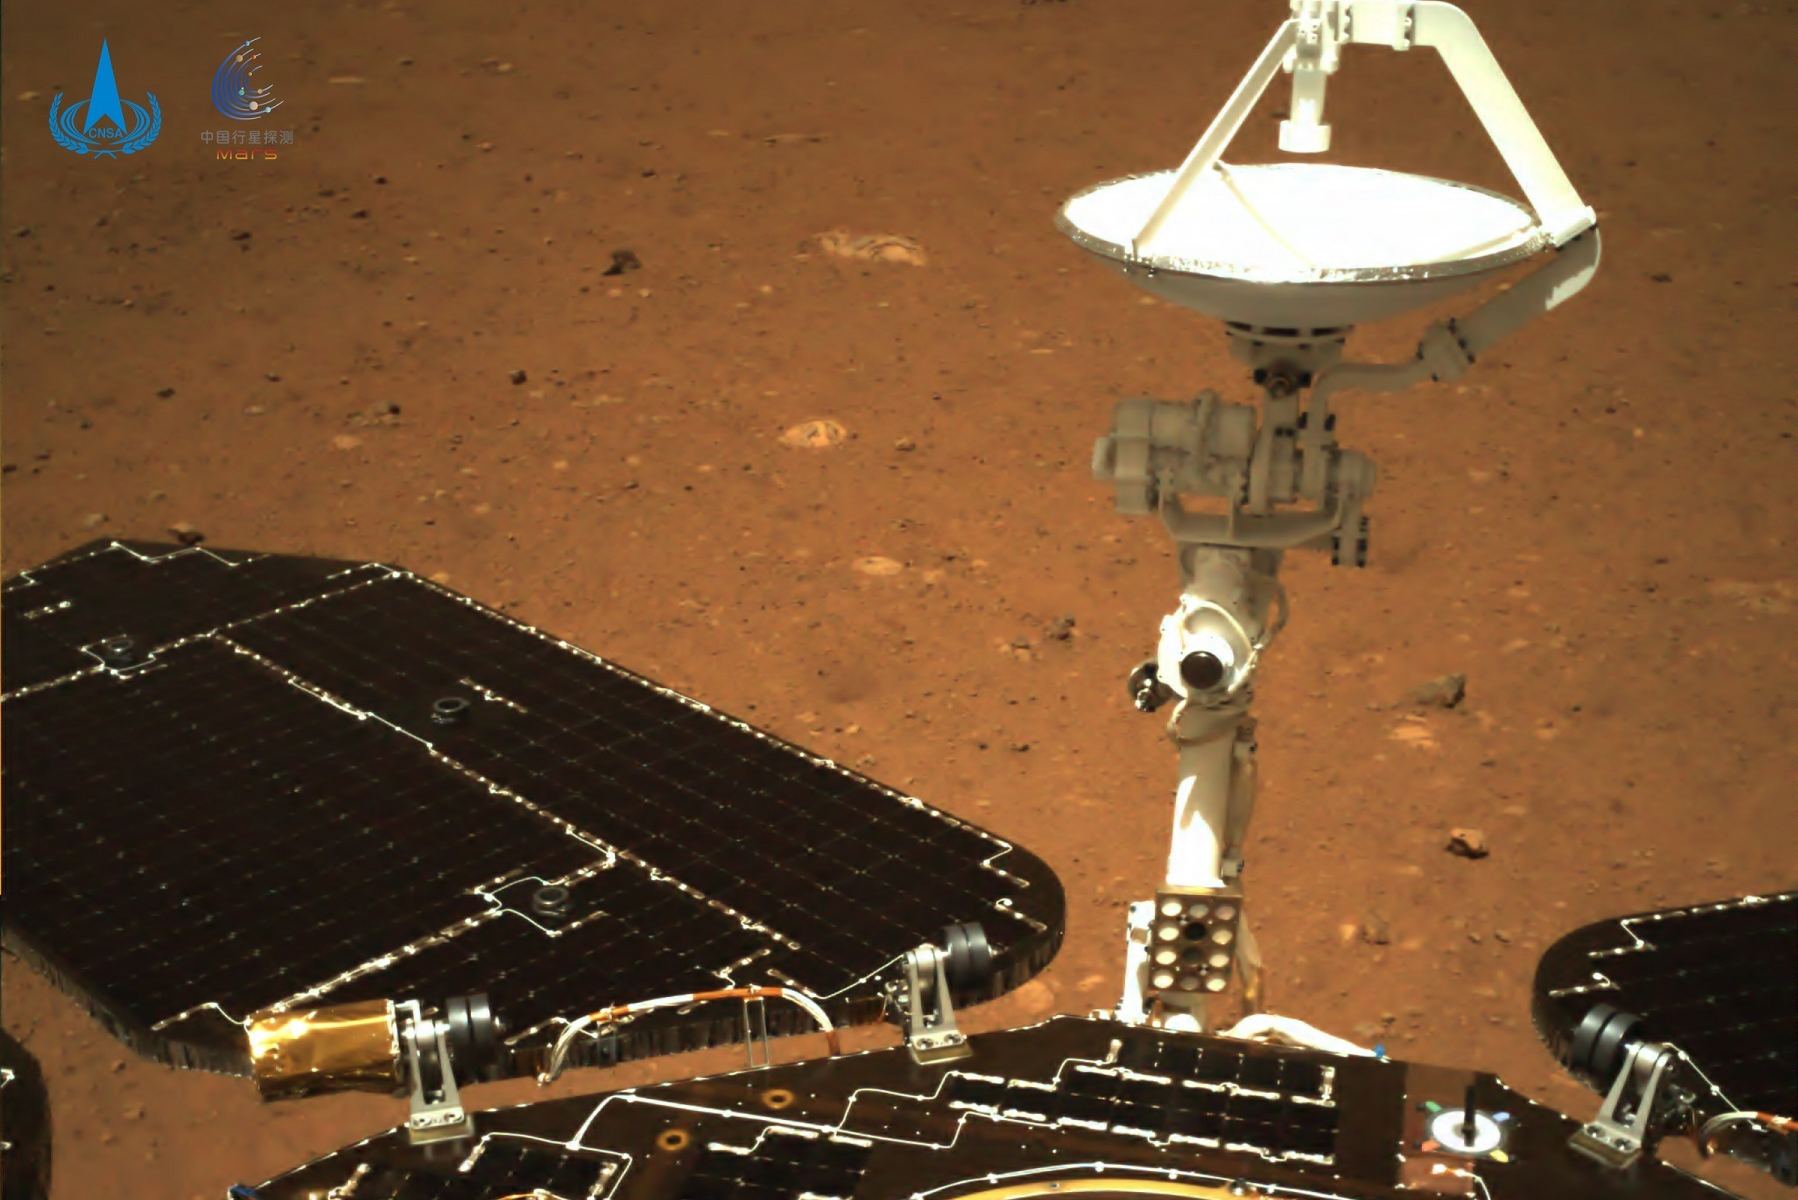 China's Zhurong rover on Mars